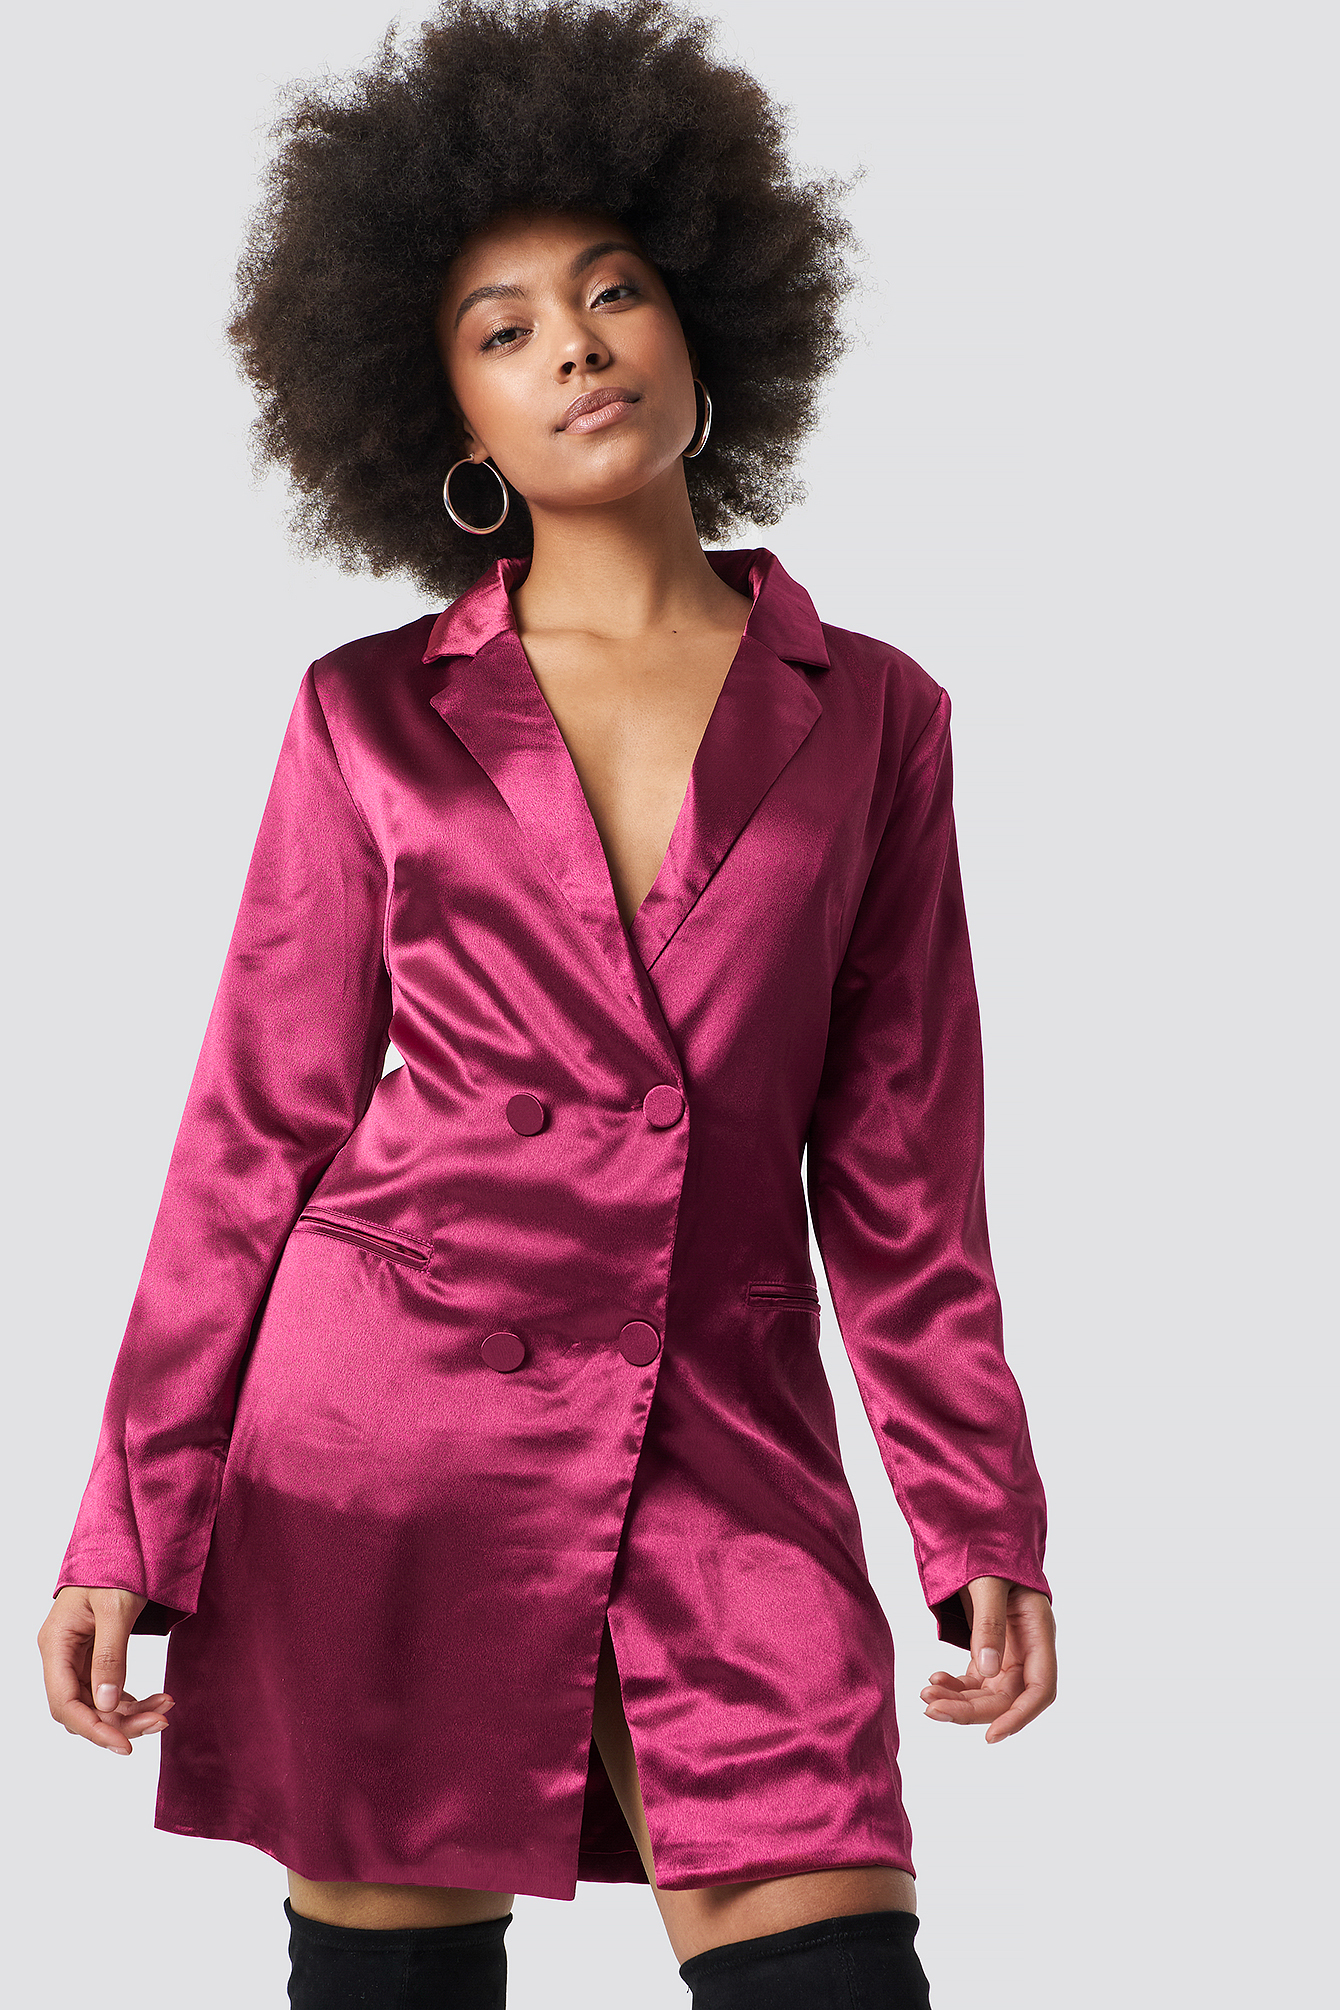 Satin Suit Dress Mulberry Satin | NA-KD